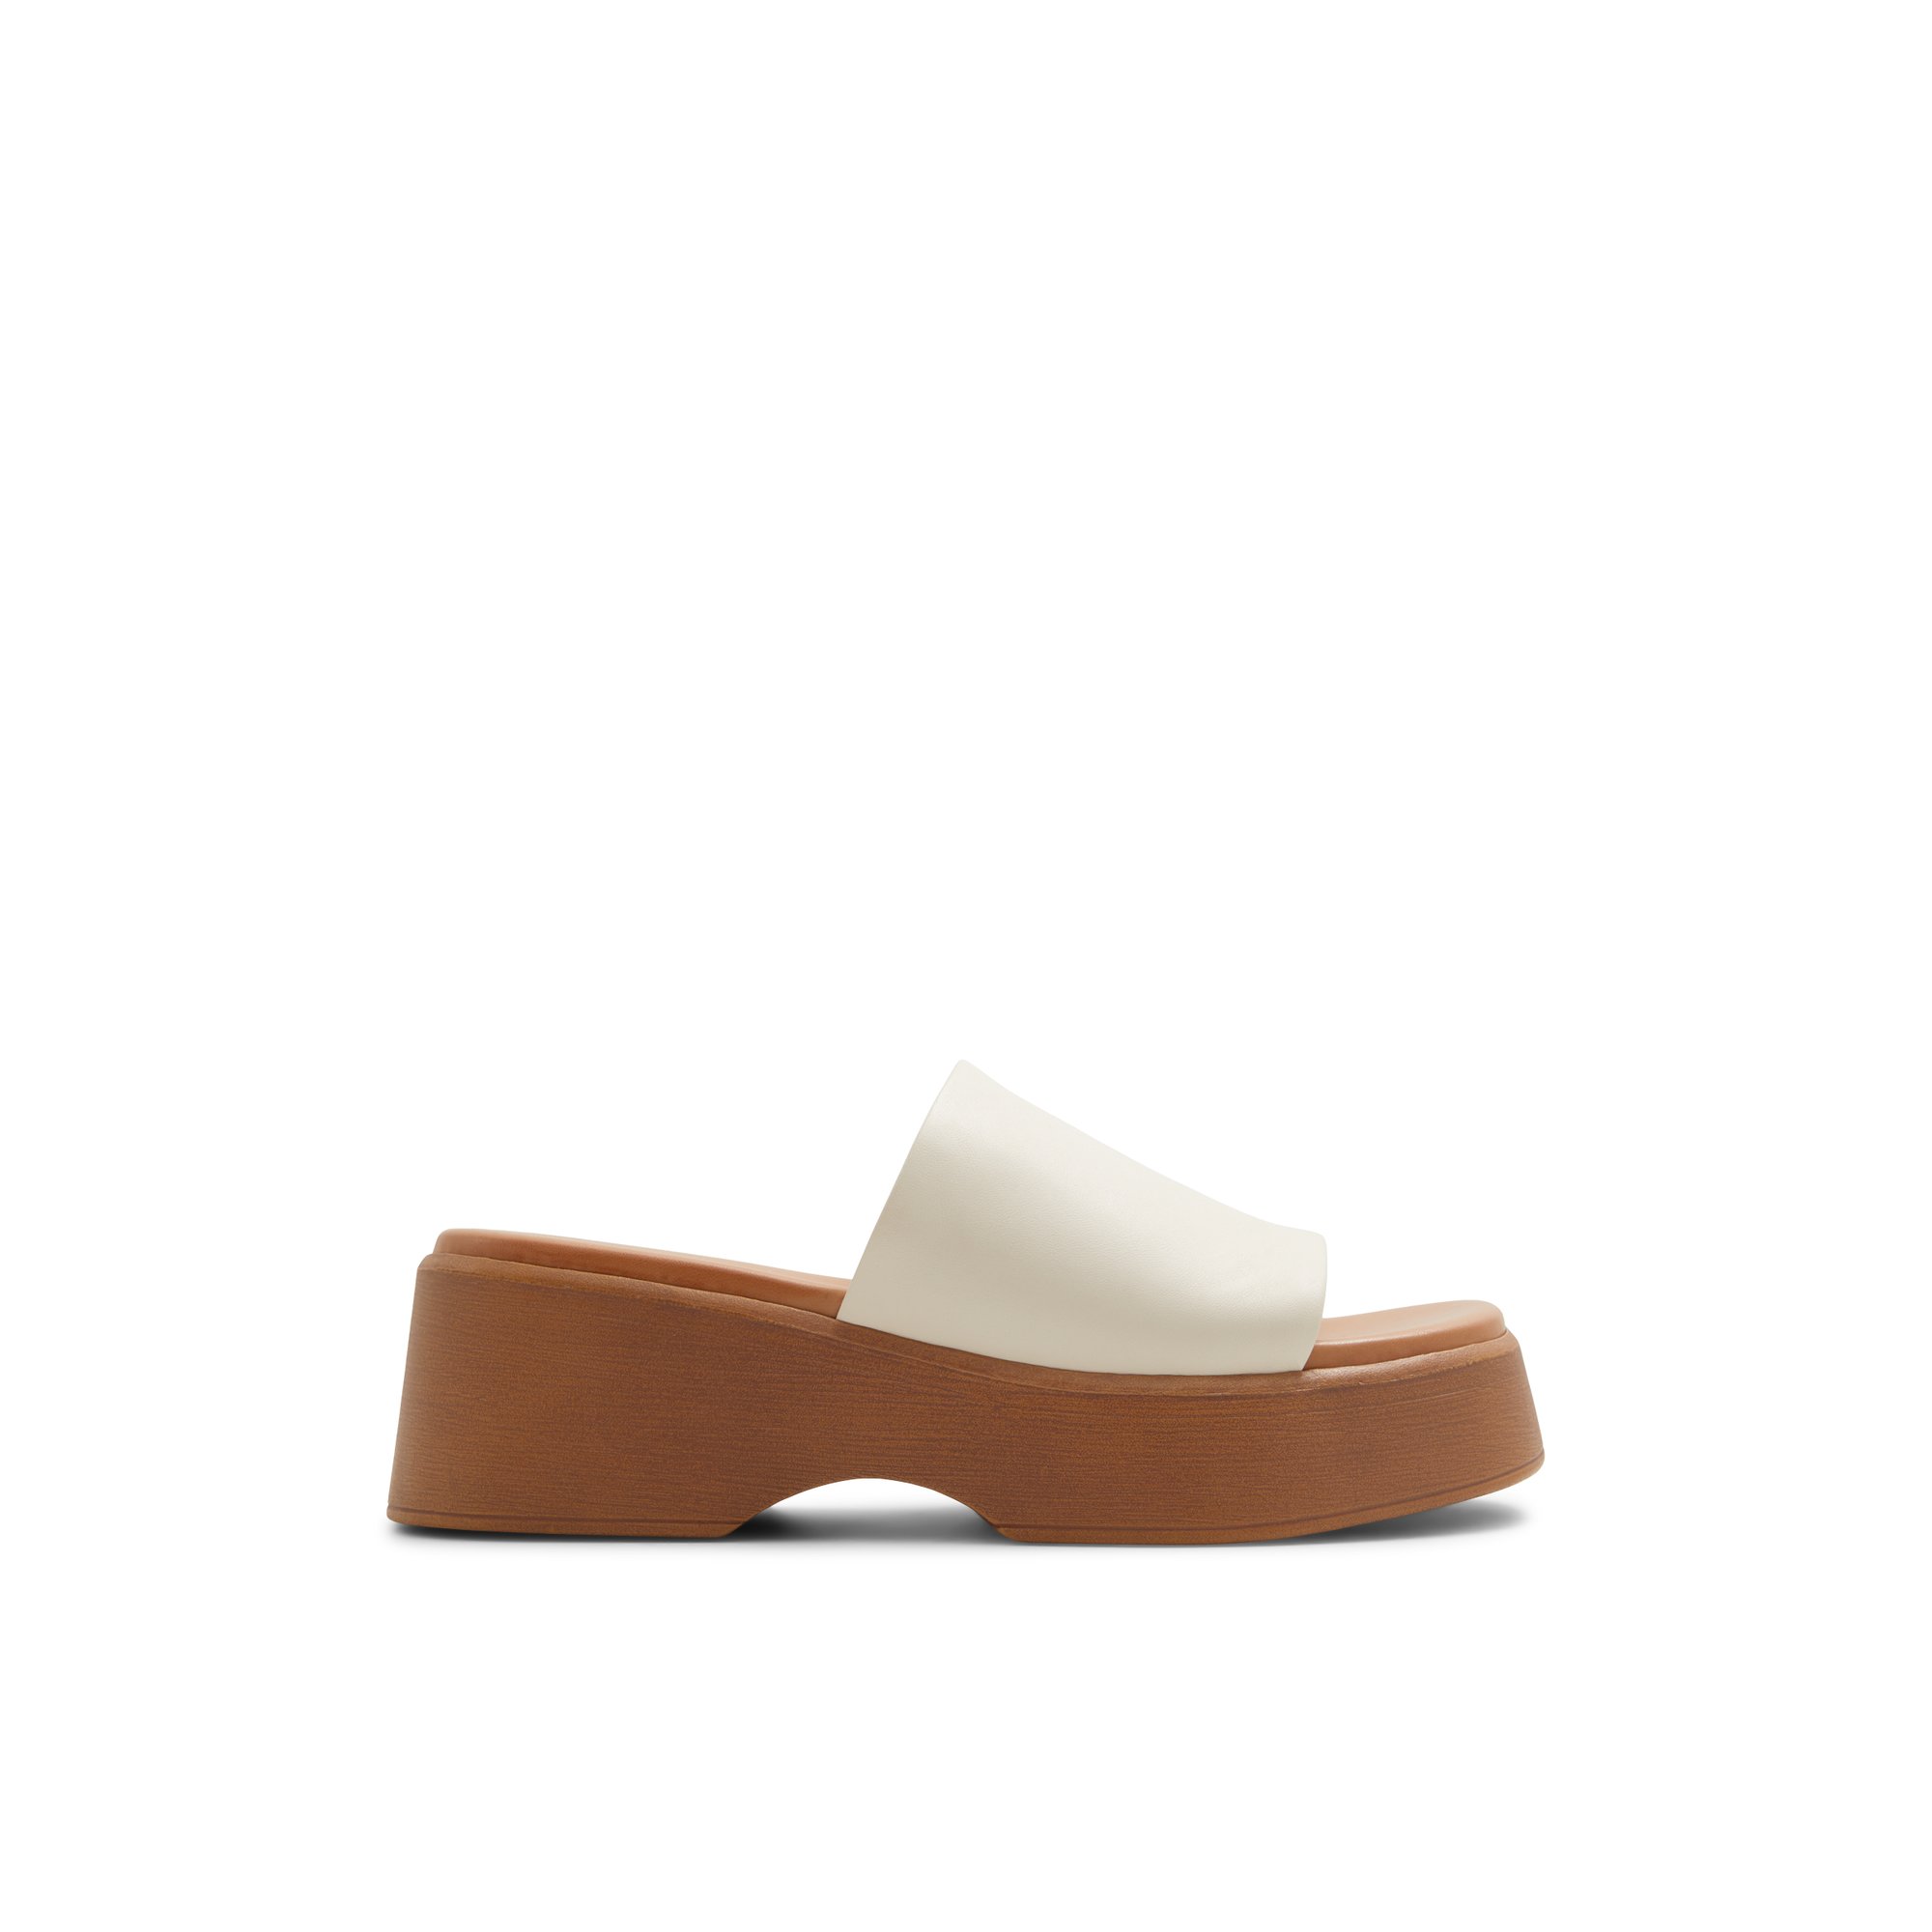 ALDO Yassu - Women's Platform Sandal Sandals - White